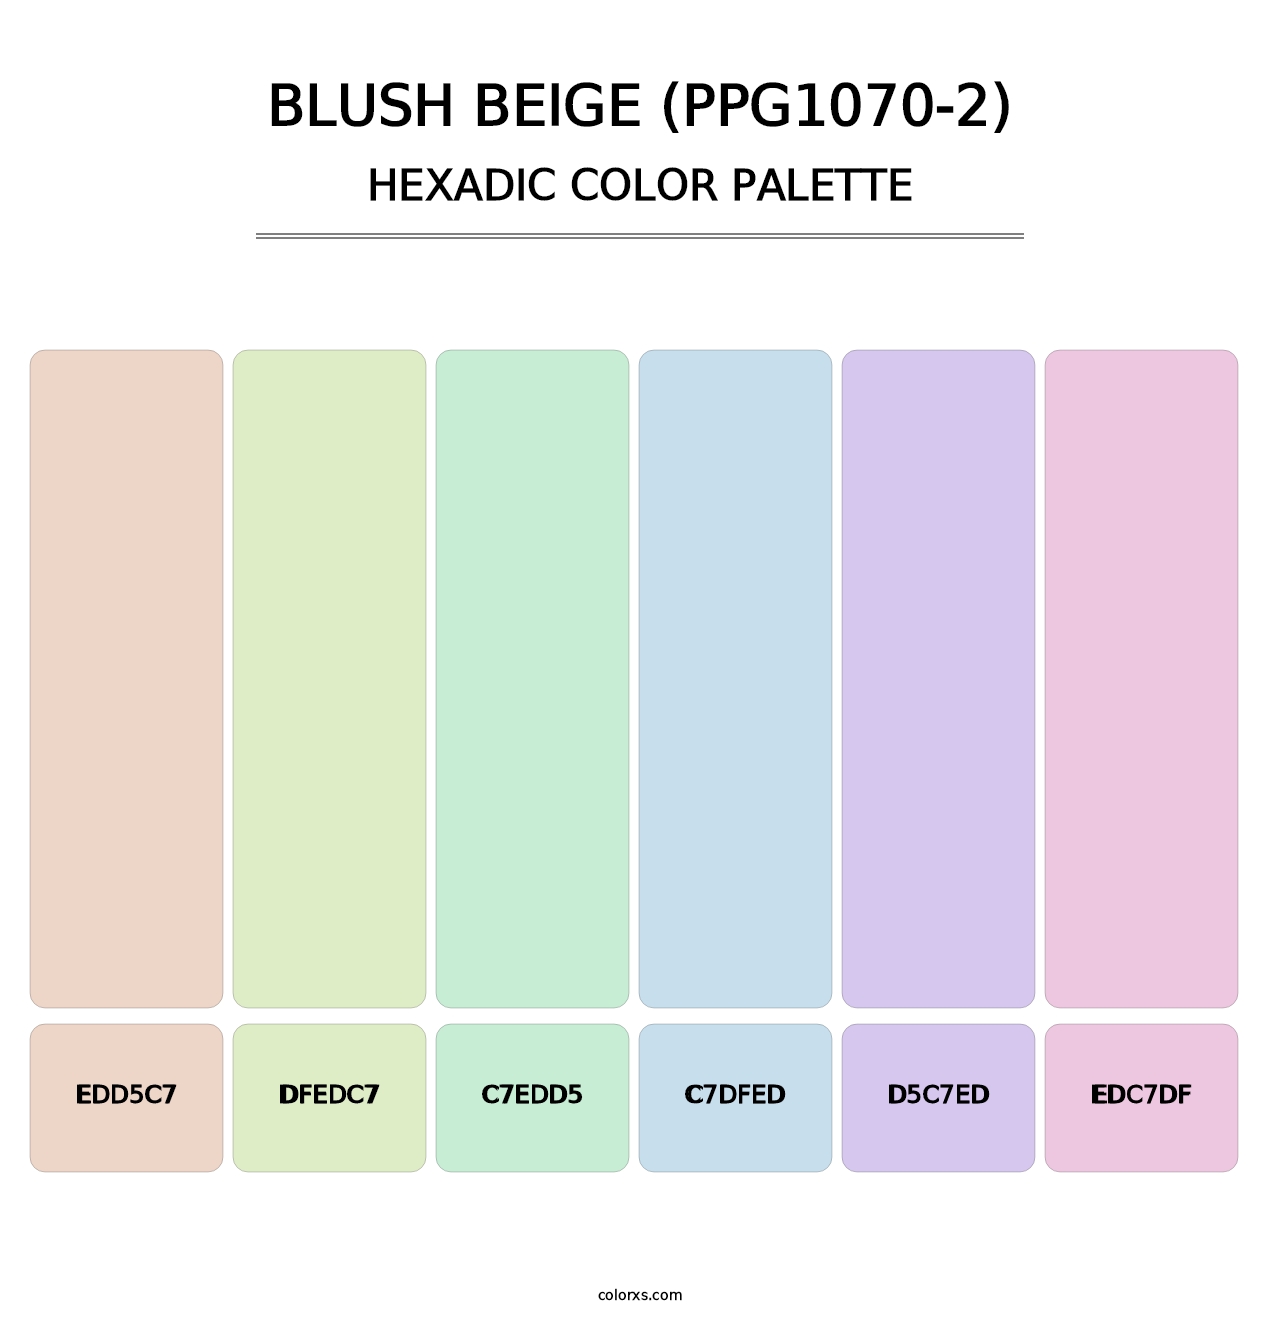 Blush Beige (PPG1070-2) - Hexadic Color Palette